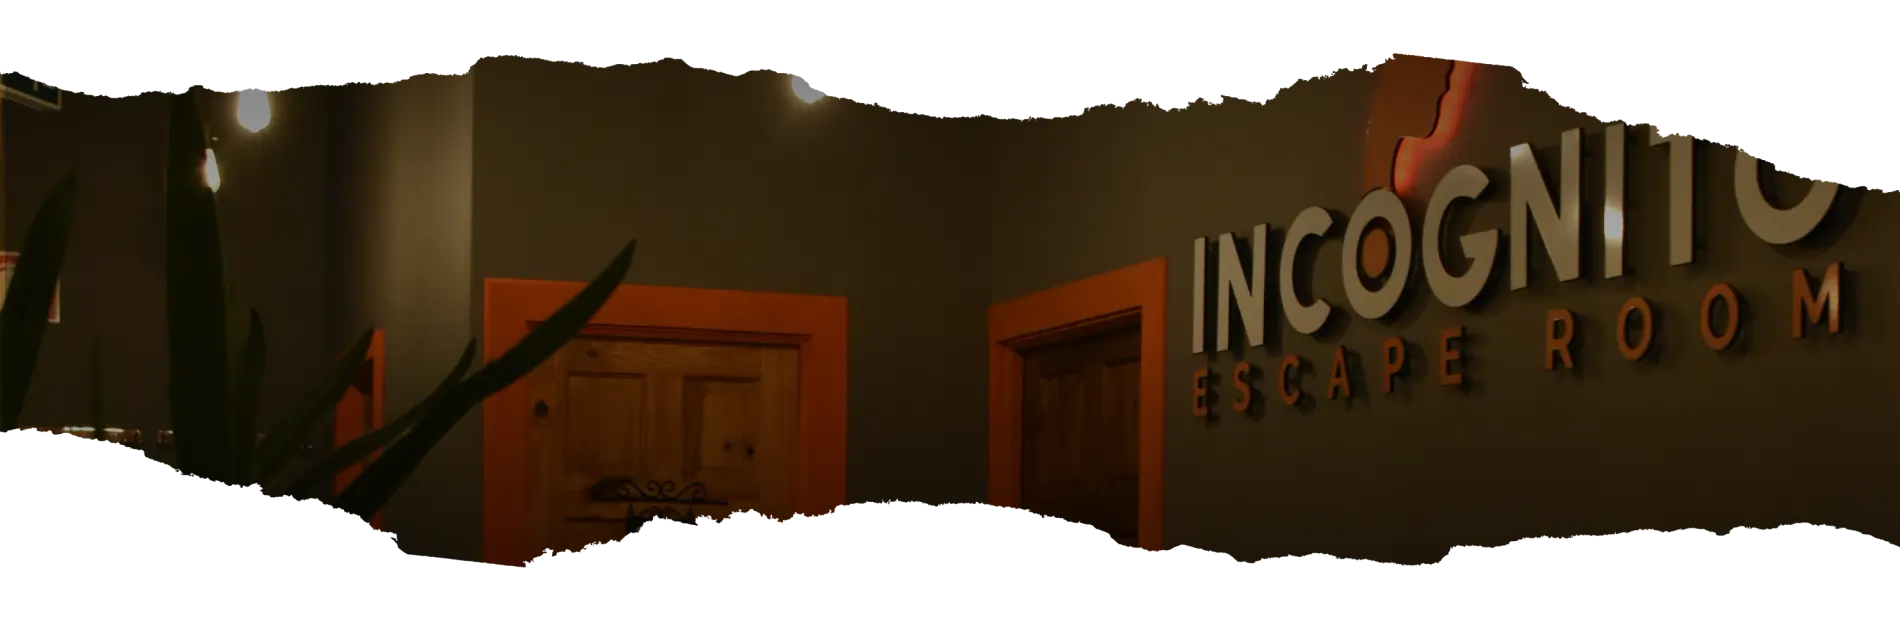 Interior of Incognito escape room adventures lobby in Dublin, Ireland